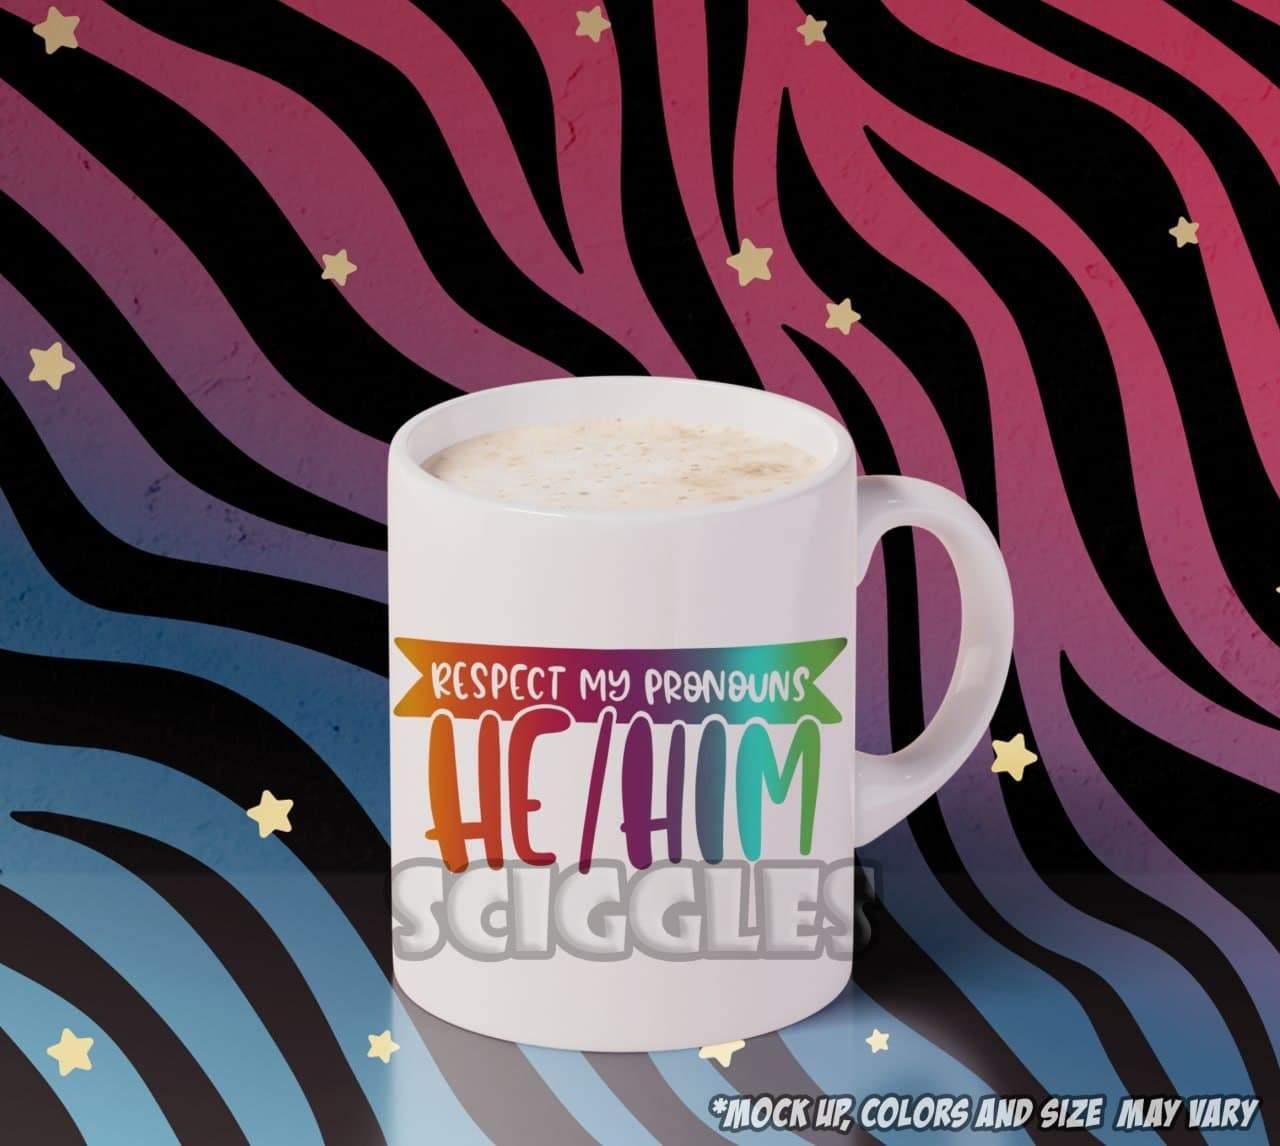 Preferred Pronouns Coffee Mug, Mugs - Sciggles